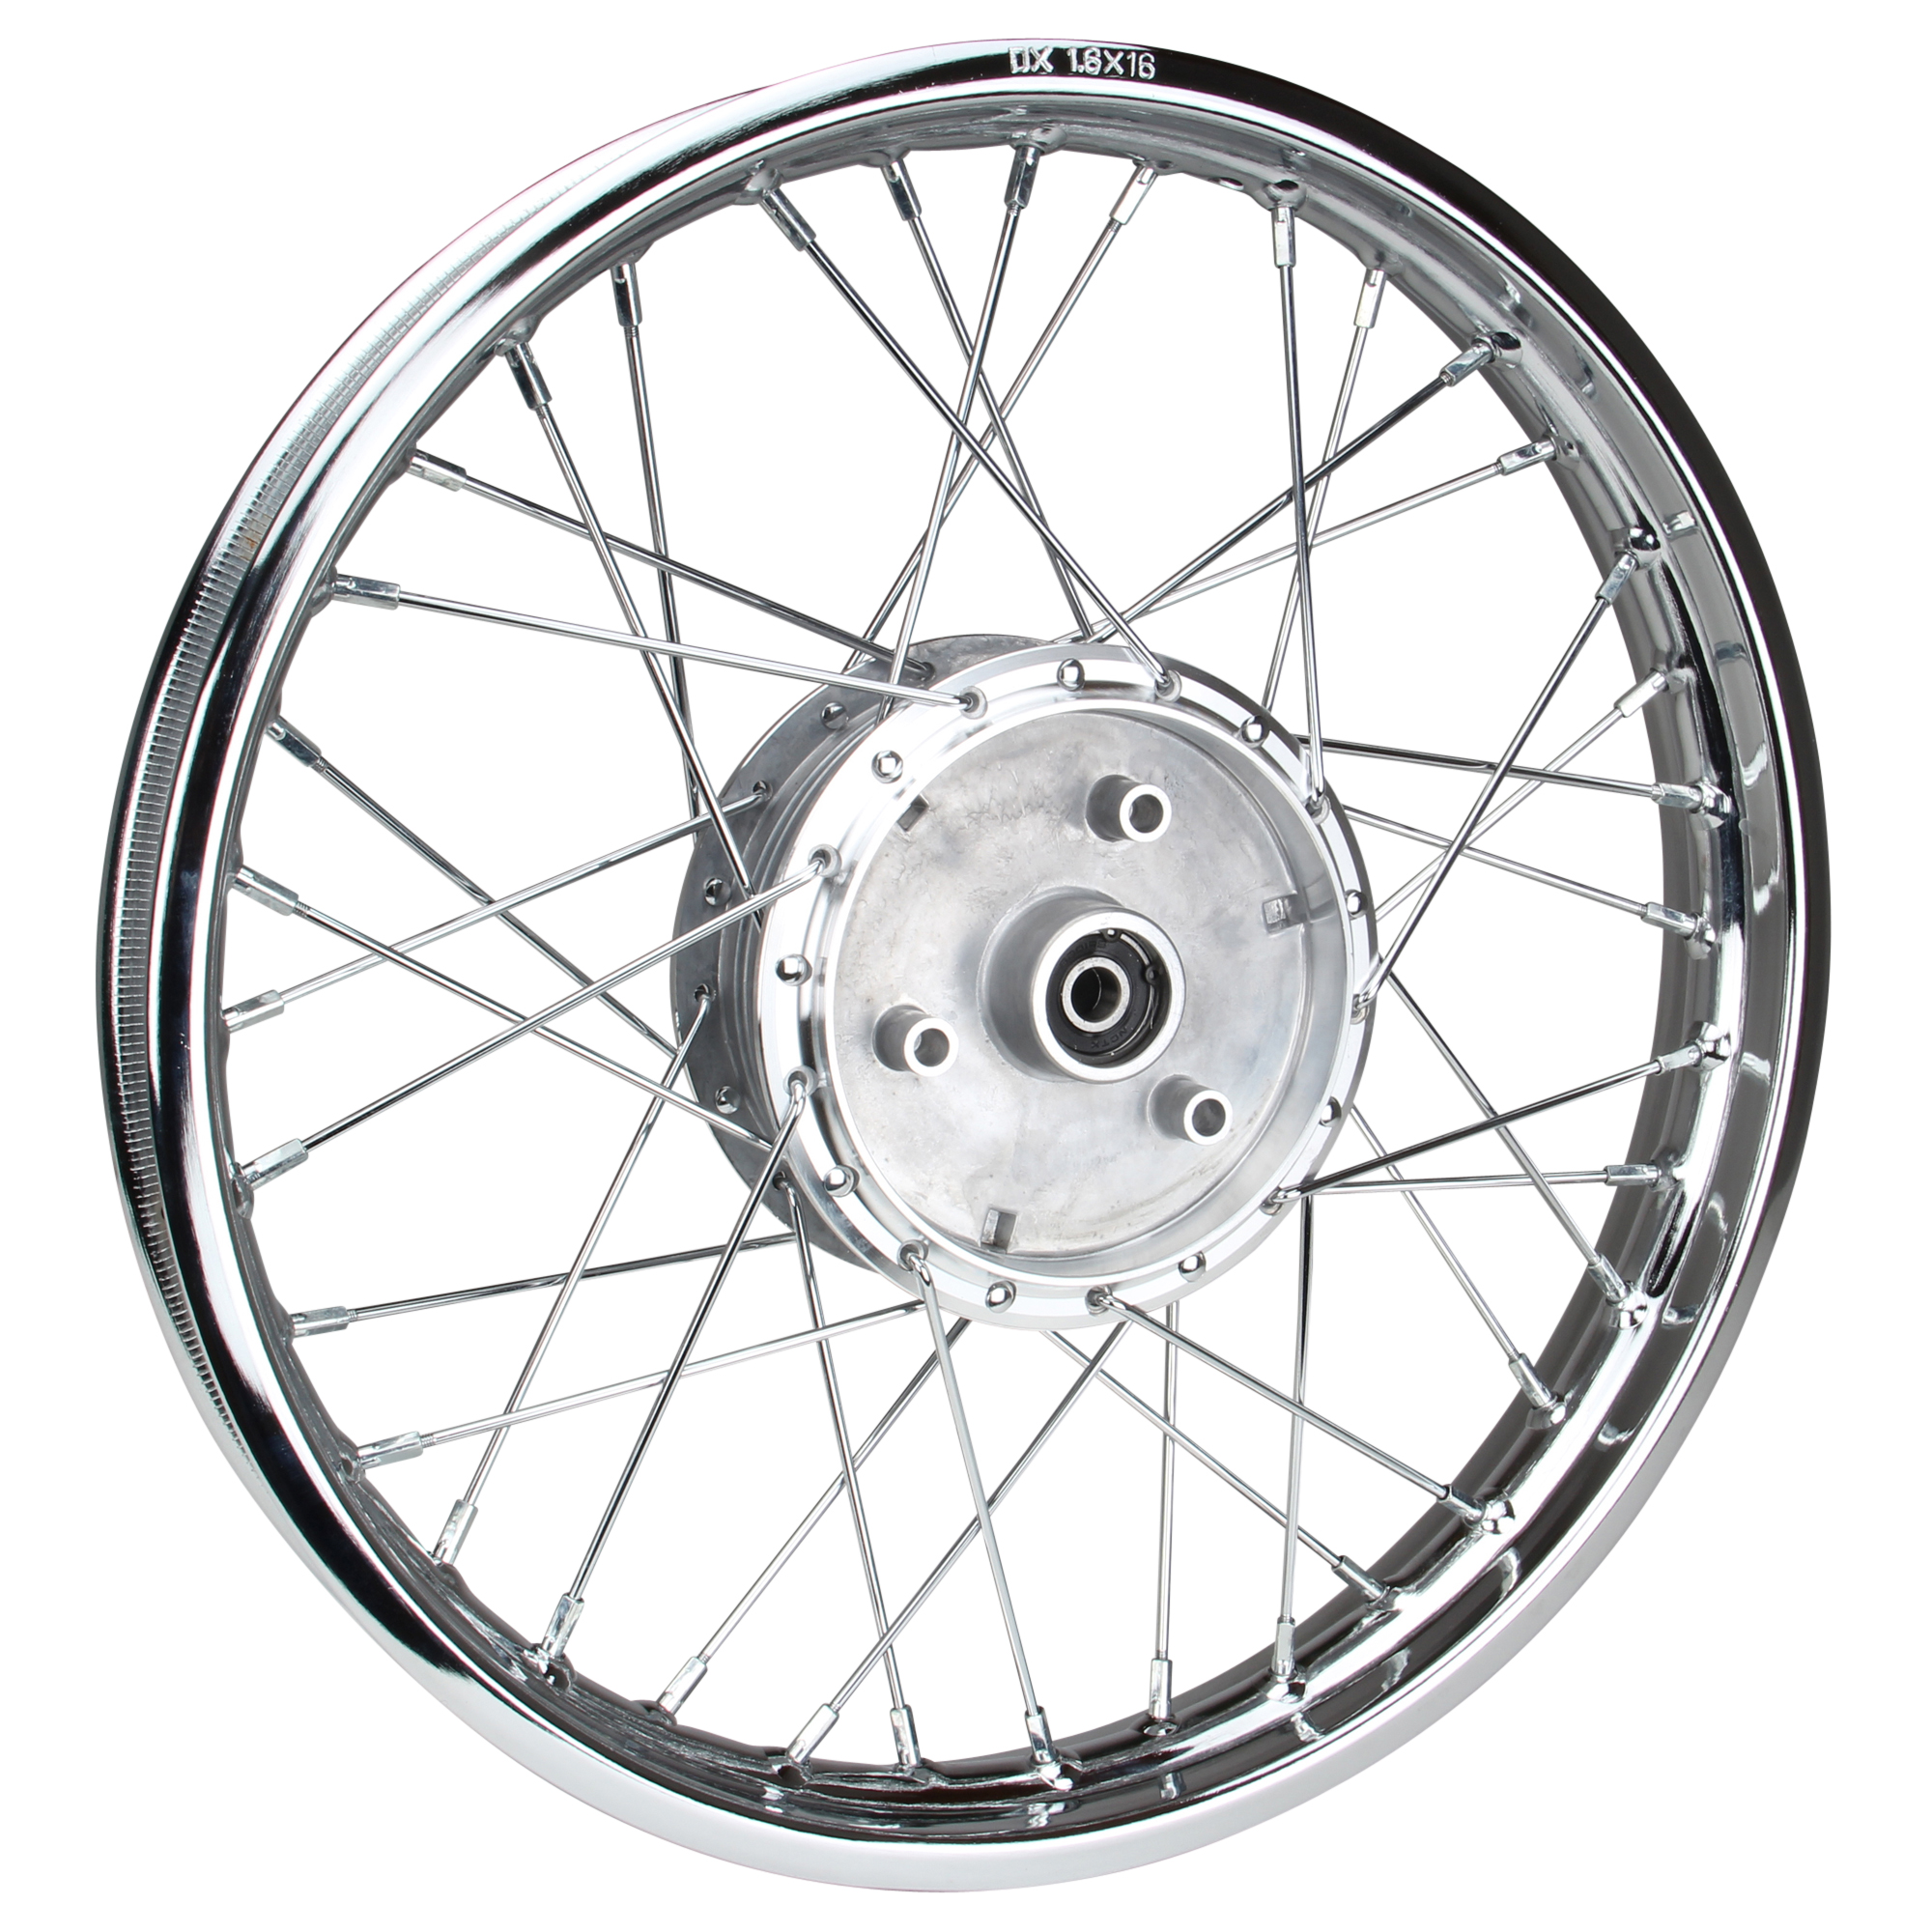 Spoked alloy wheel 1.5x16 inch for Simson S50 S51 Star KR 51